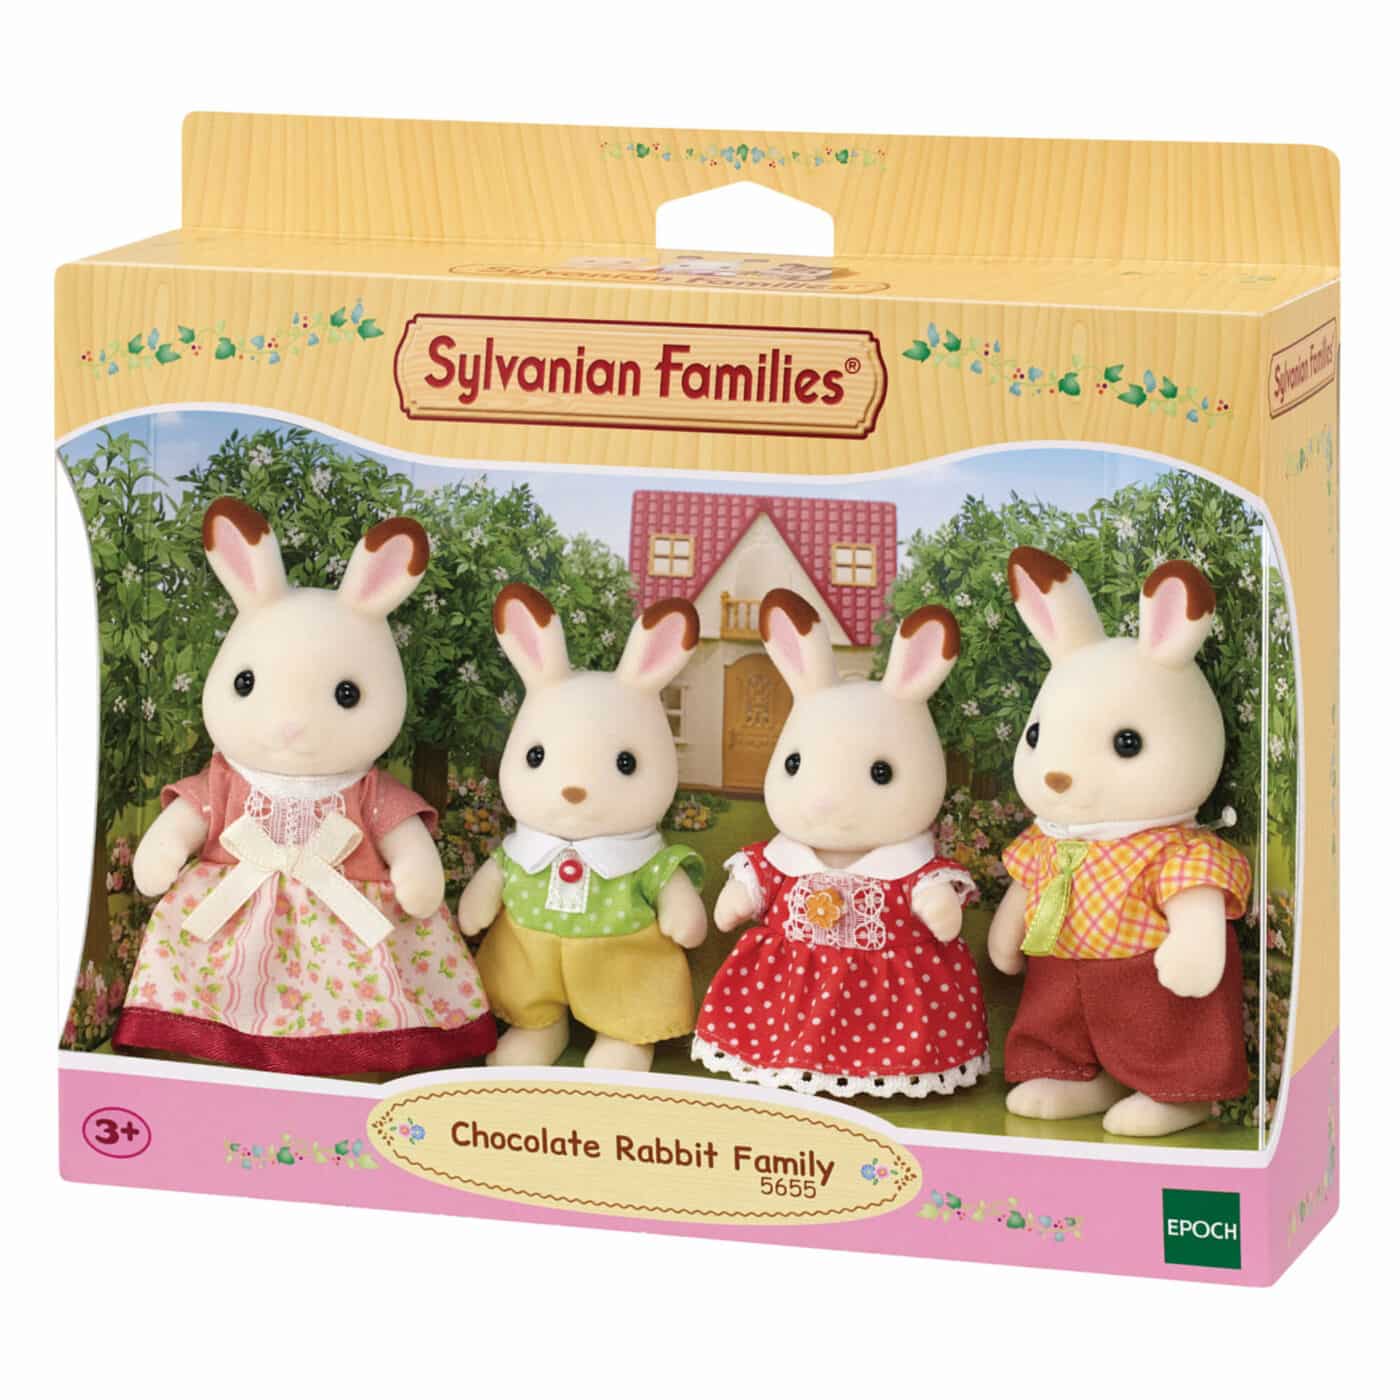 Sylvanian Families - Chocolate Rabbit Family SF5655